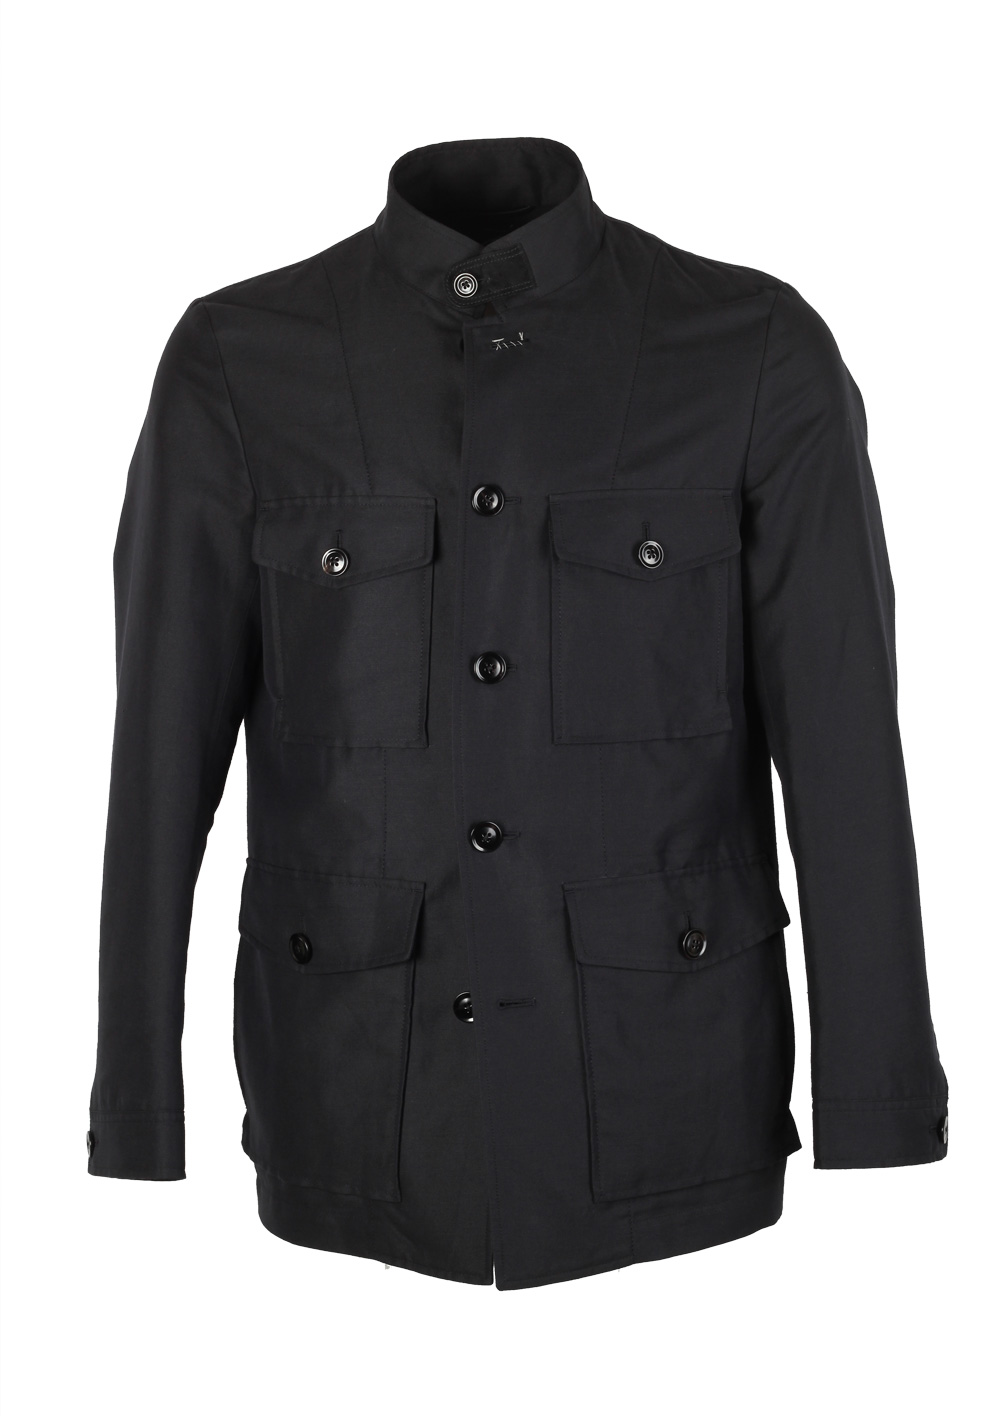 TOM FORD Black Field Jacket Coat Size 50 / 40R U.S. Outerwear | Costume ...